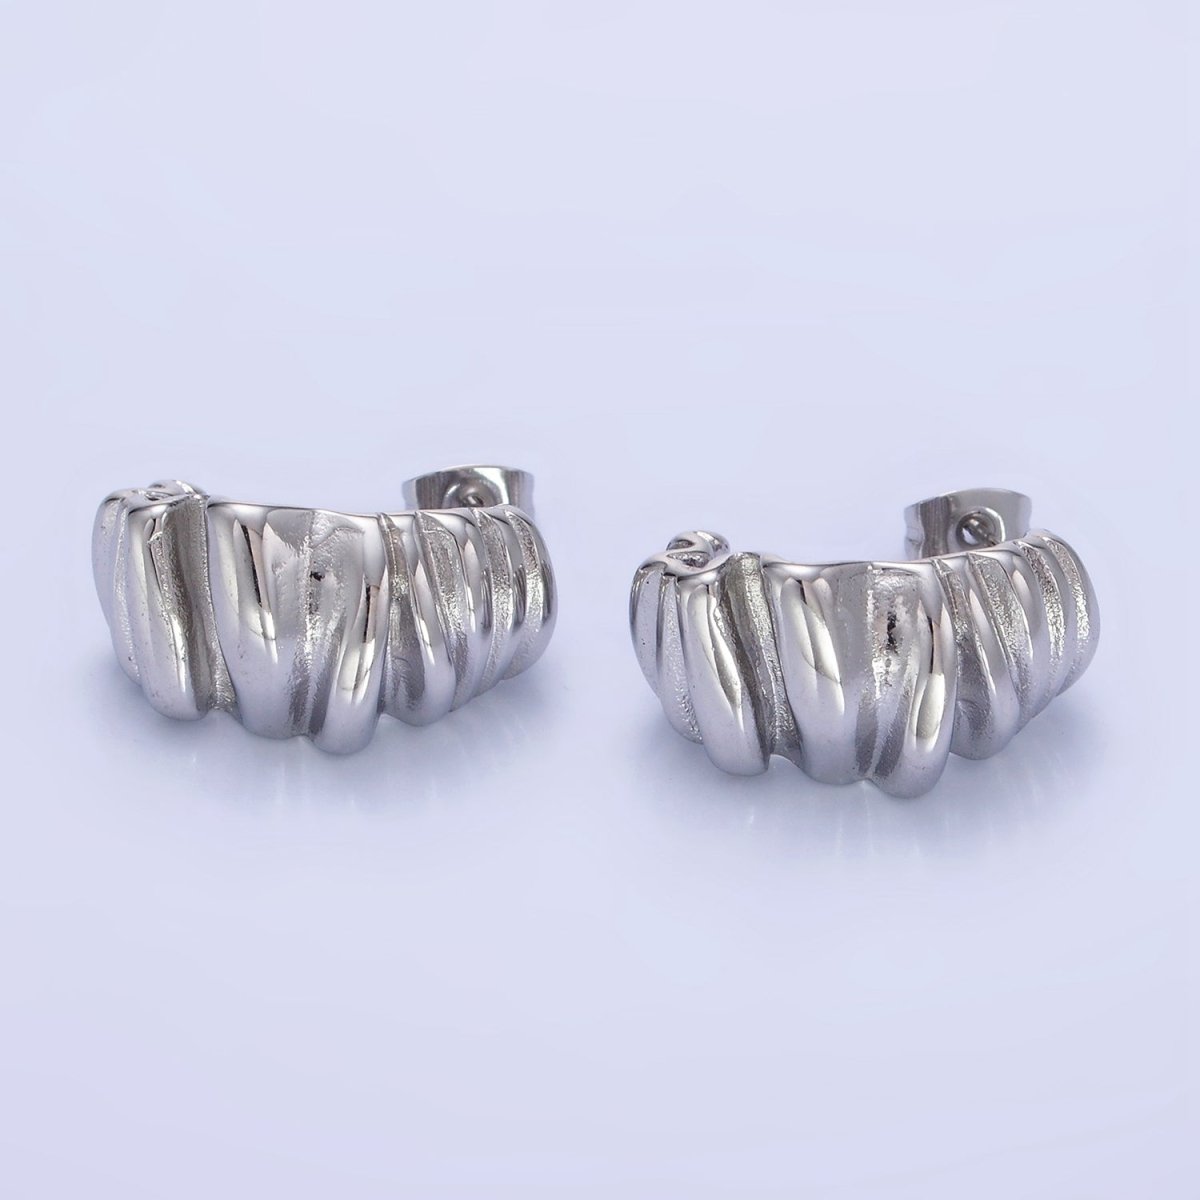 Stainless Steel 21mm Molten Foil J-Shaped Hoop Earrings in Gold & Silver | P440 P441 - DLUXCA